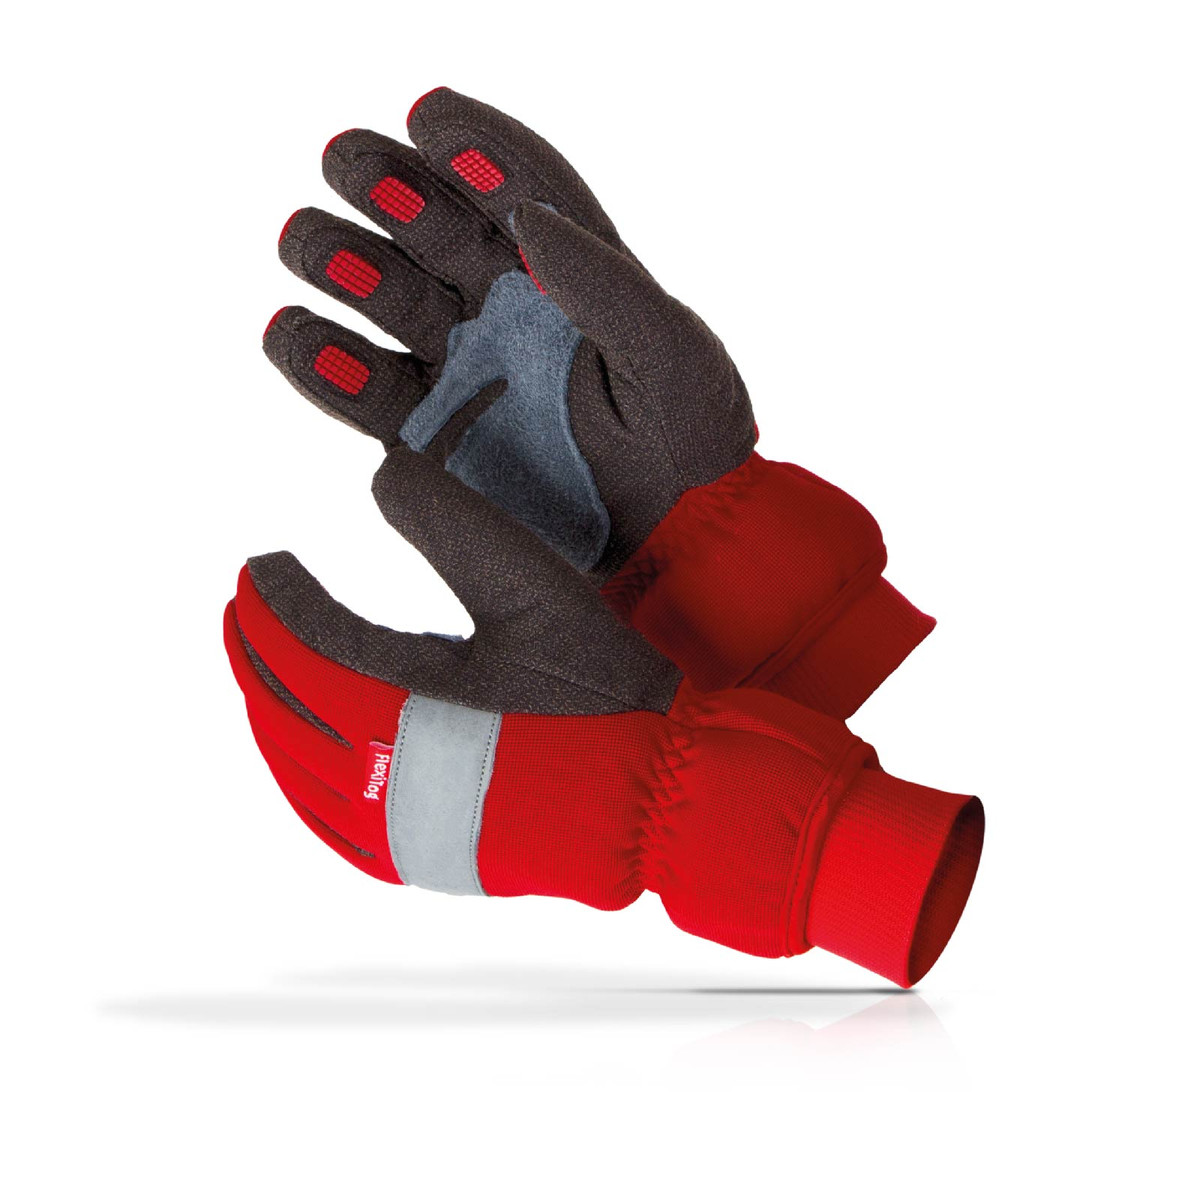 Flexitog Thermail Kevlar Freezer Safety Gloves